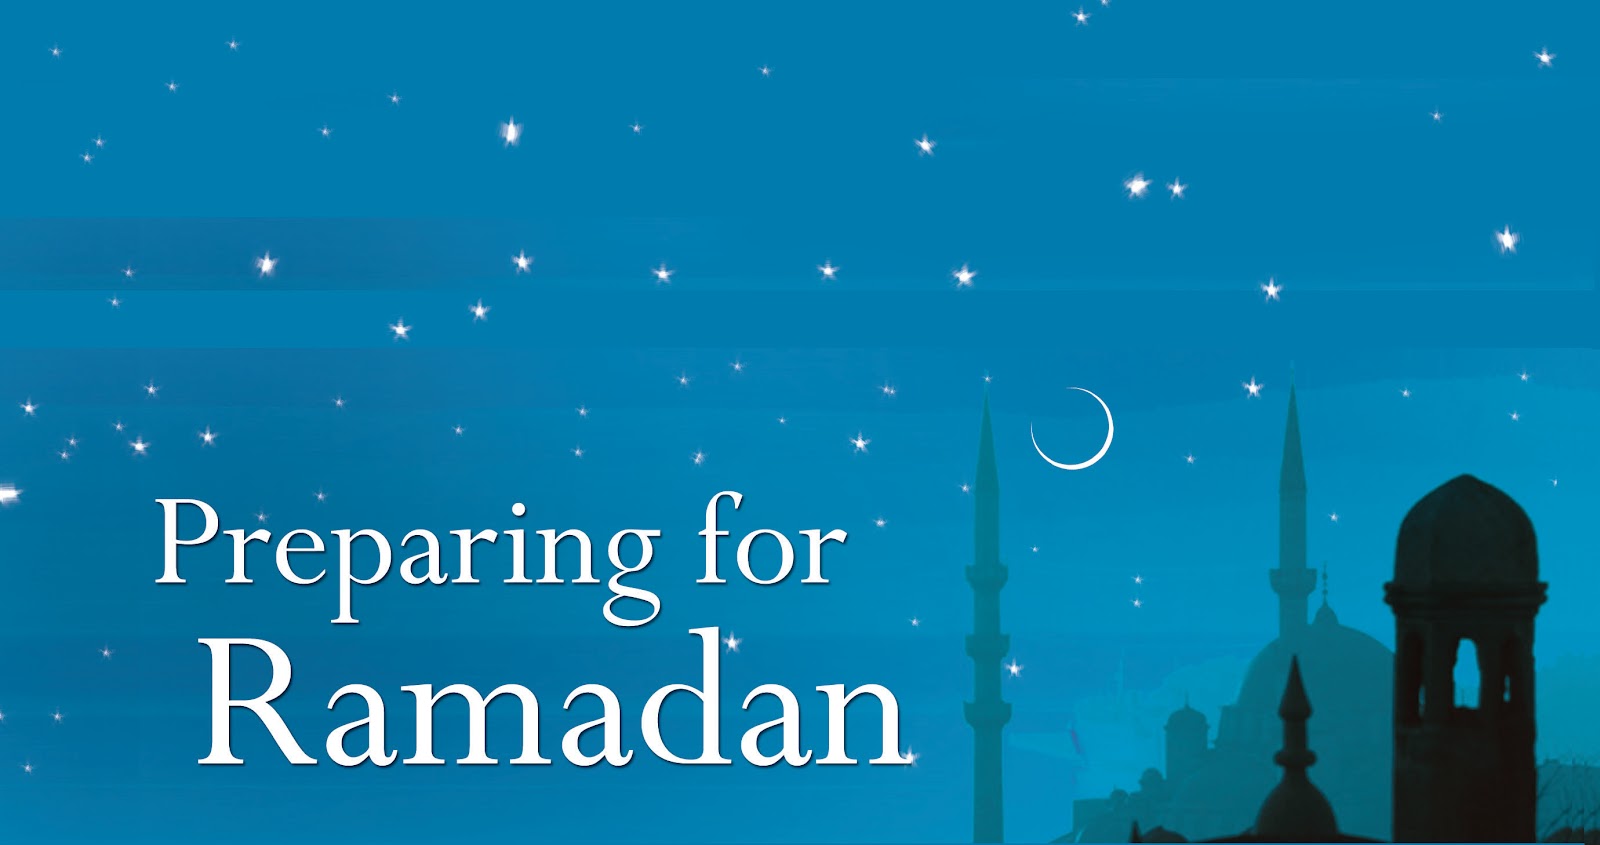 Look Forward, Get Ready for Ramadan